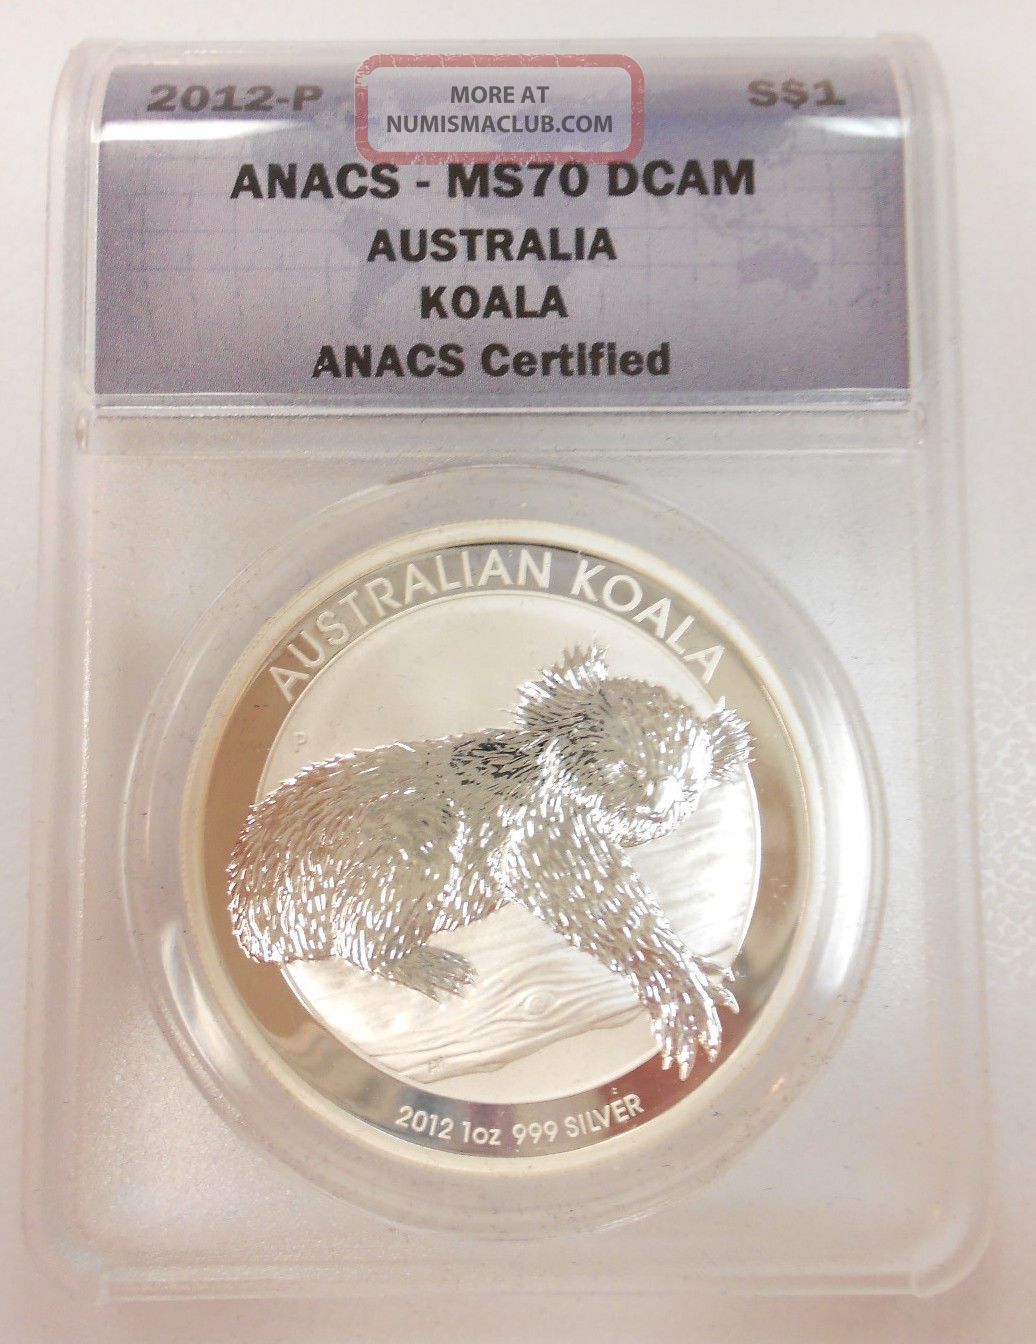 2012 - P Australia Koala $1 Coin Anacs Ms70 Dcam